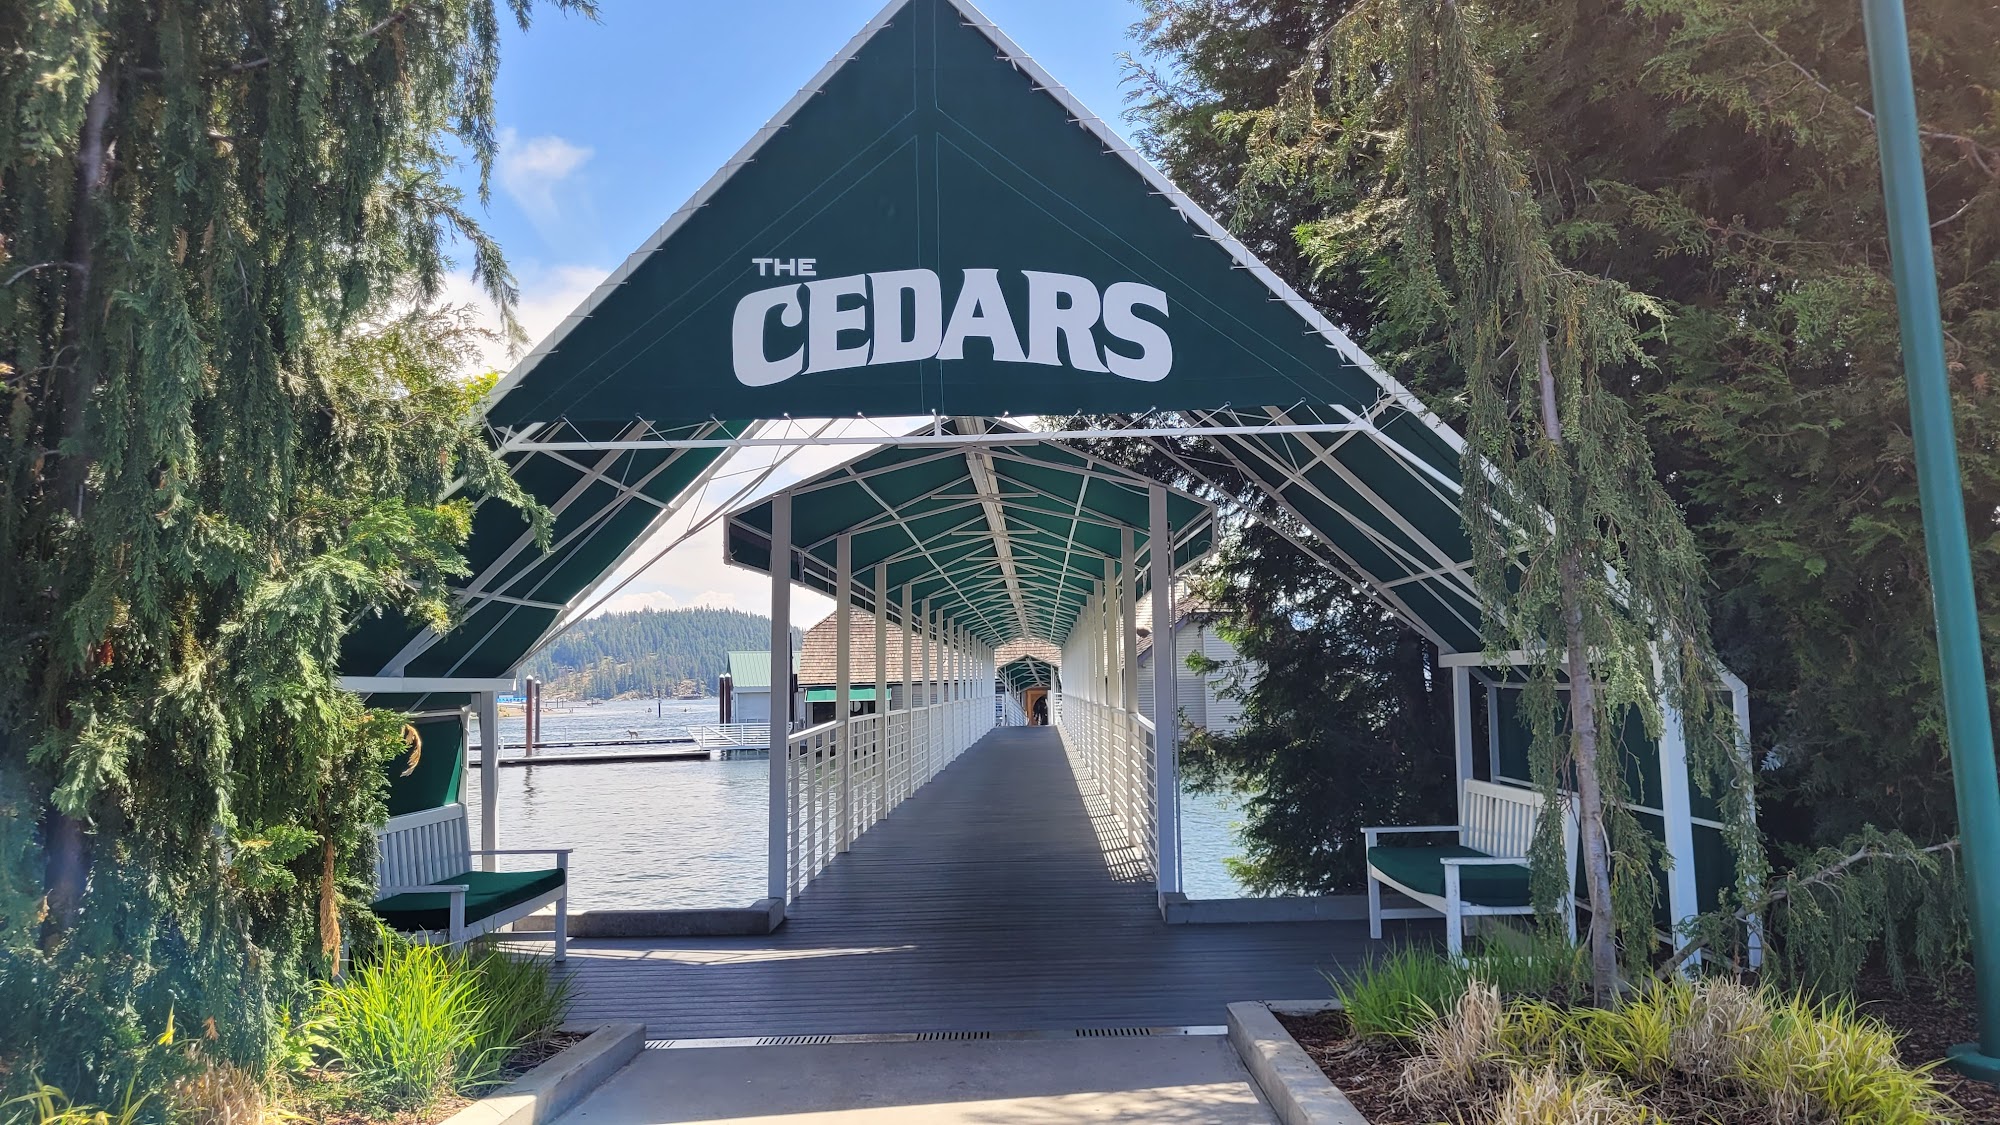 The Cedars Floating Restaurant